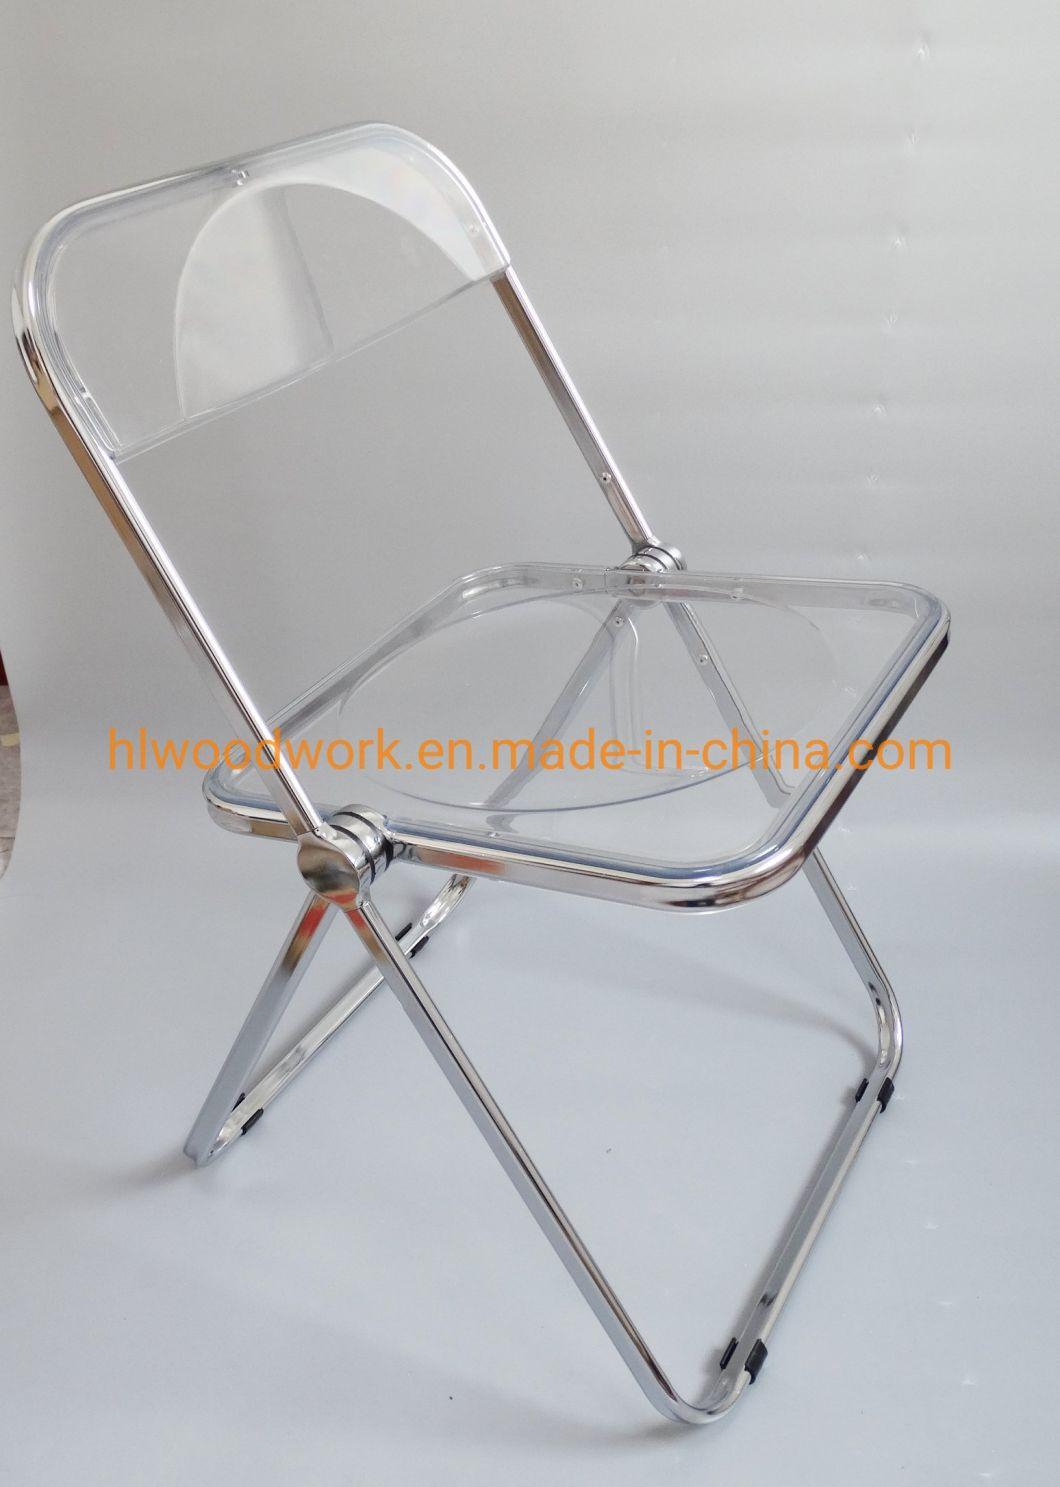 Modern Transparent Blue Folding Chair PC Plastic Study Chair Chrome Frame Office Bar Dining Leisure Banquet Wedding Meeting Chair Plastic Dining Chair